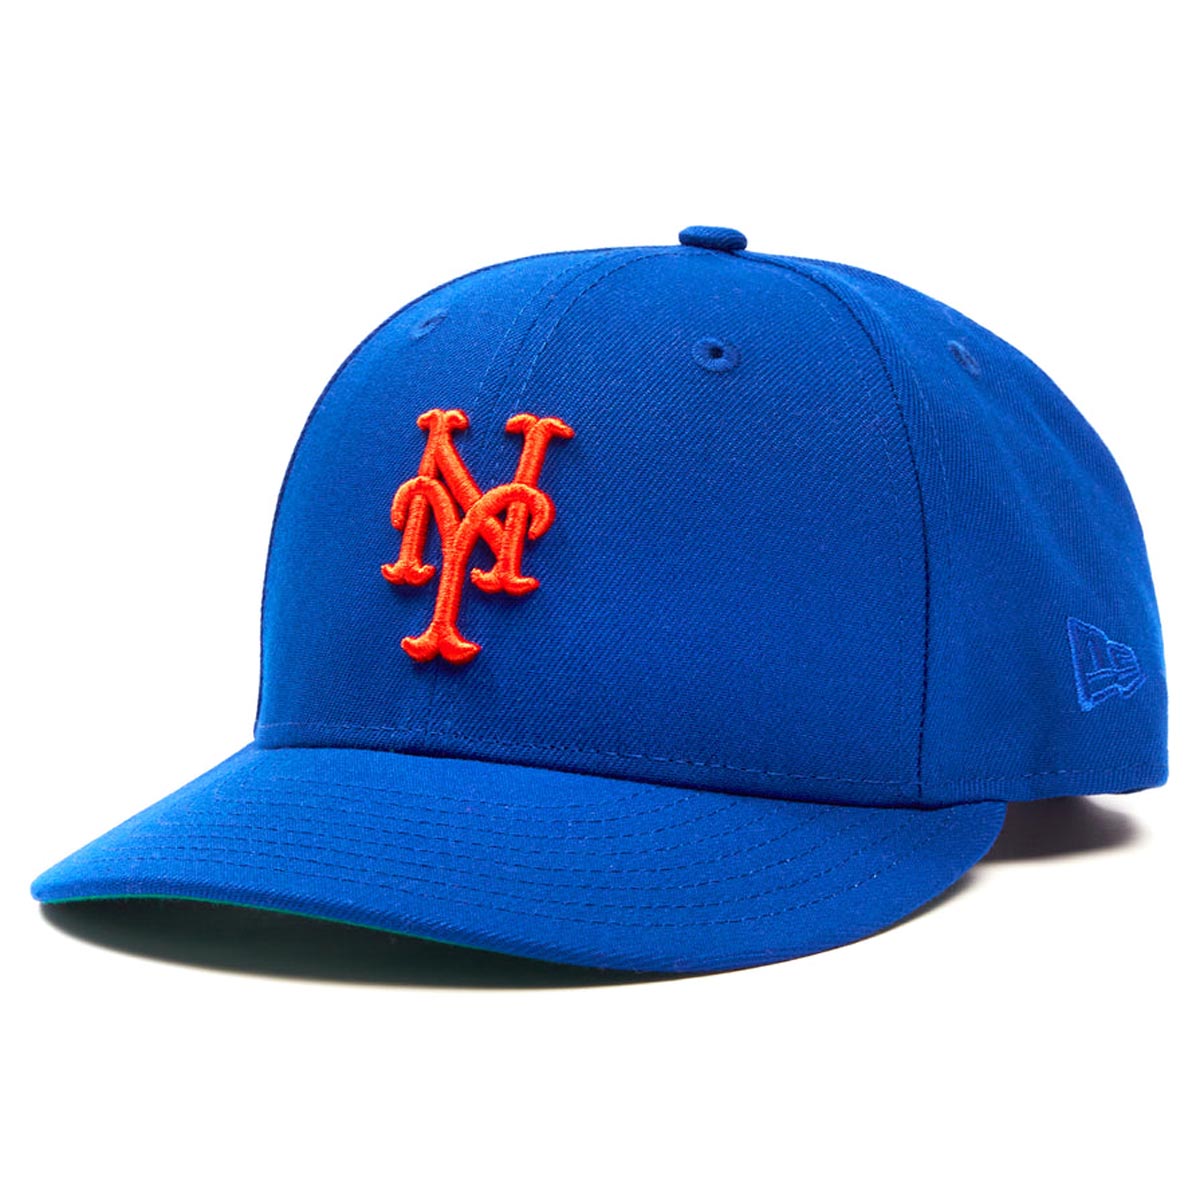 Alltimers x New Era Mets Hat - Royal image 1